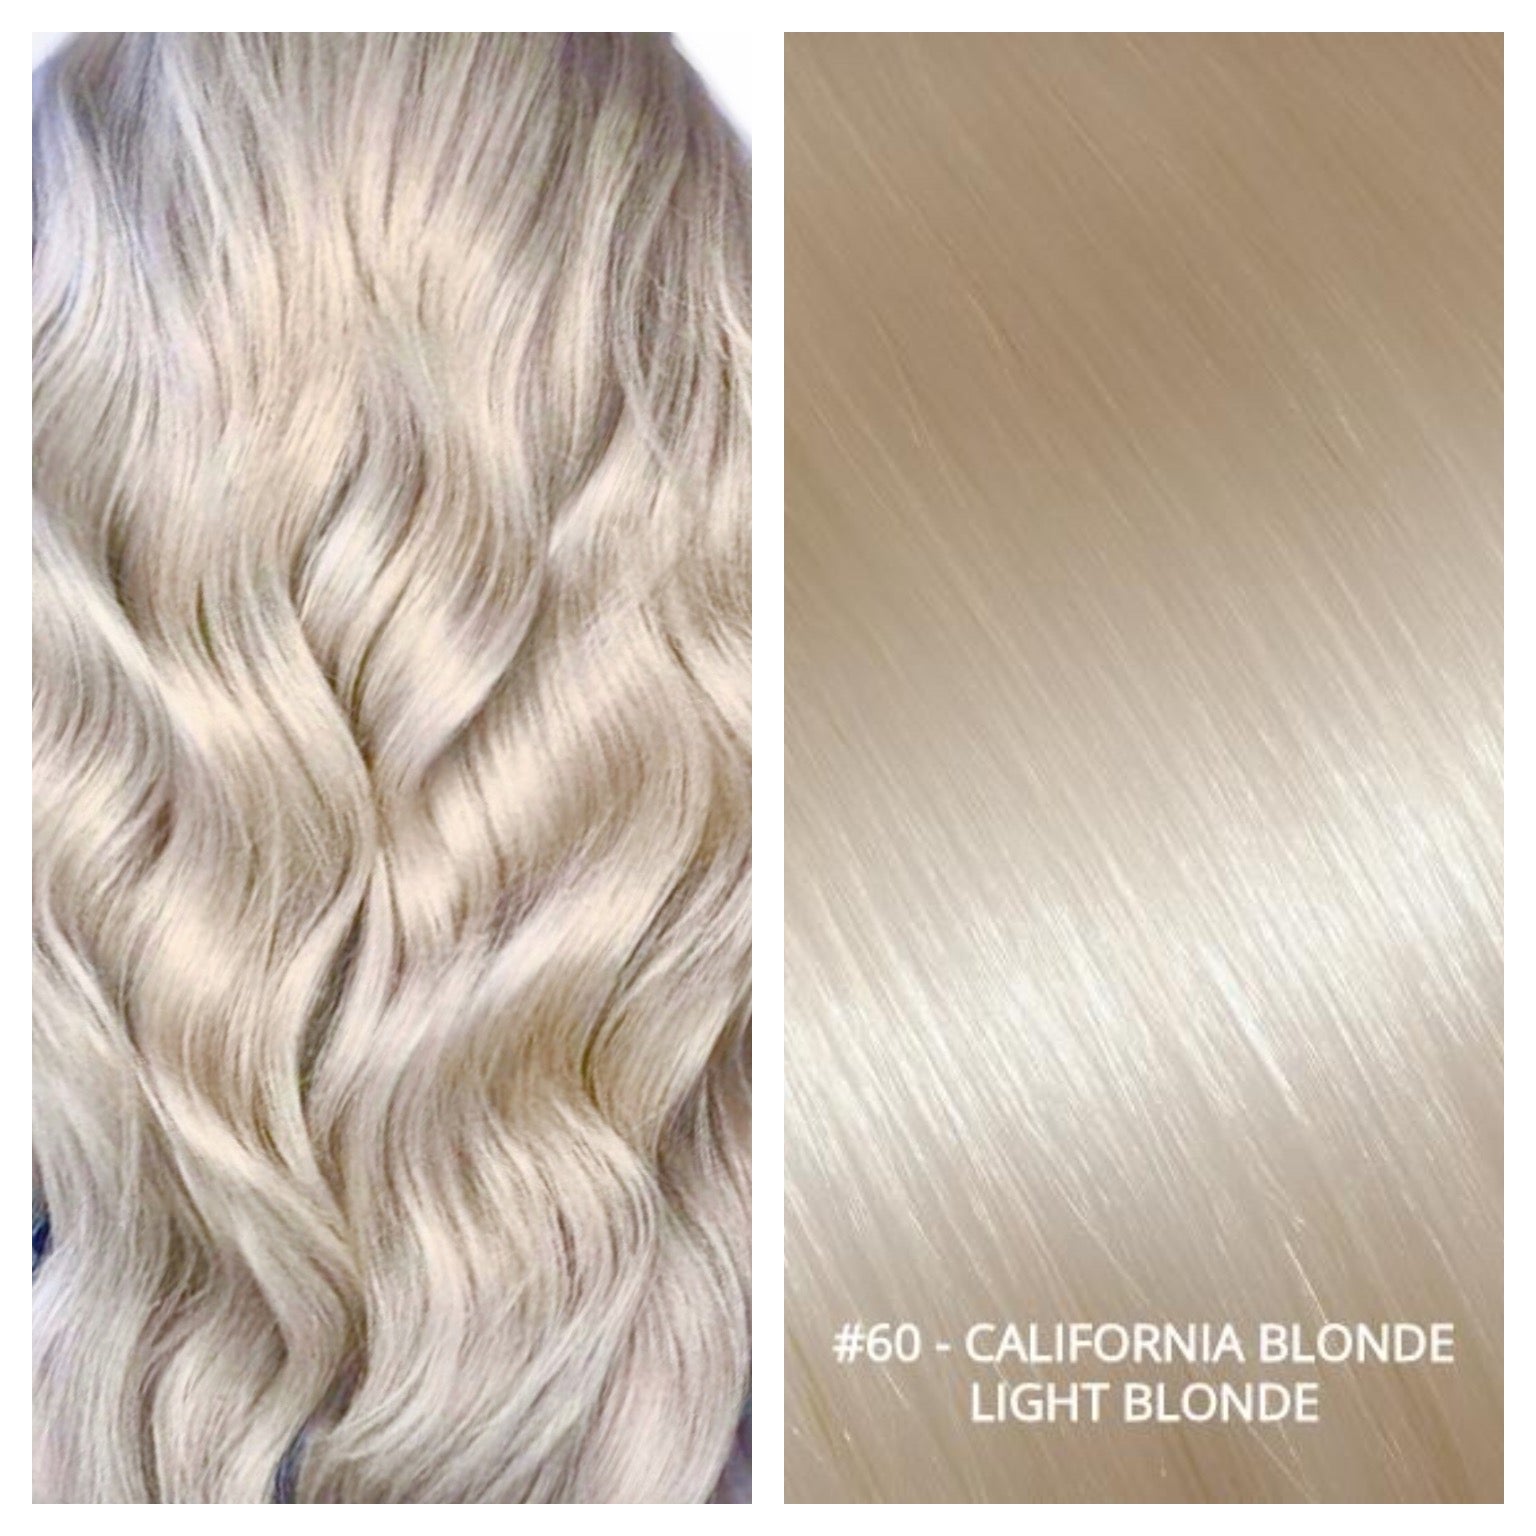 Russian weft weave hair extensions #60 - CALIFORNIA BLONDE - LIGHT BLONDE